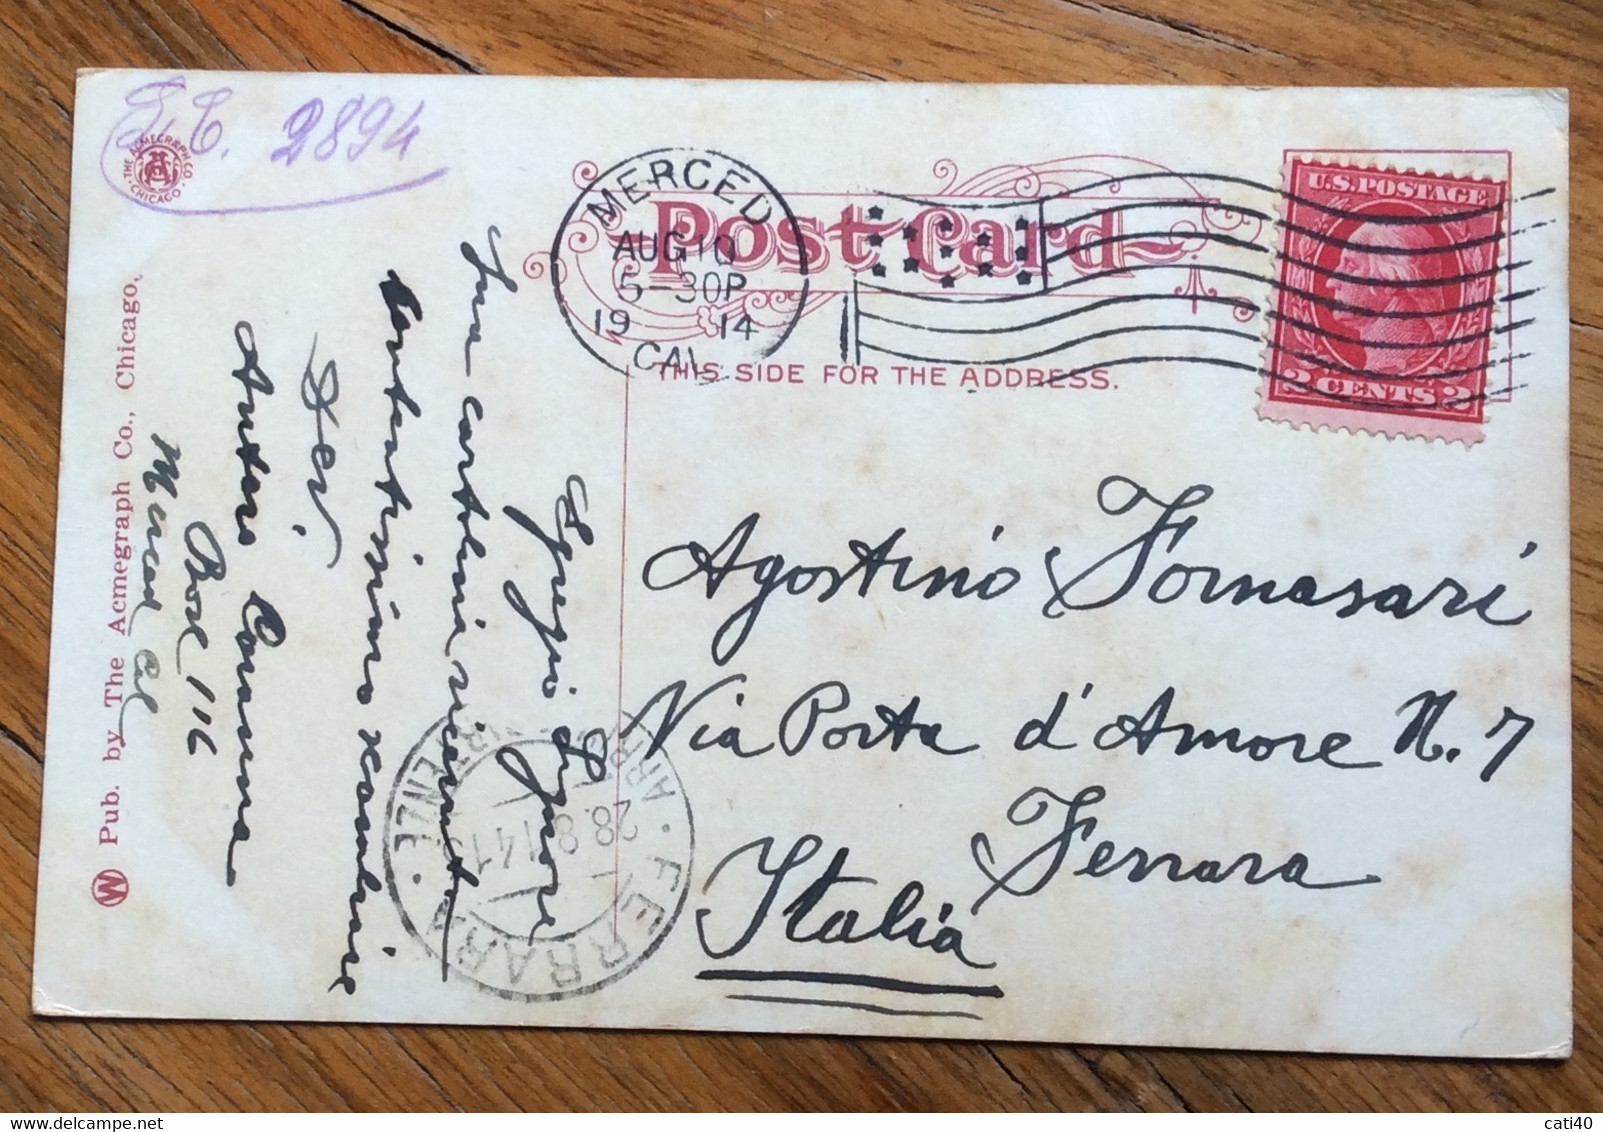 ALBERGHI - USA - SACRAMENTO HOTEL , SACRAMENTO , CAL.  - VINTAGE POST CARD FROM MERCED AUG 10  1914 - Cape Cod